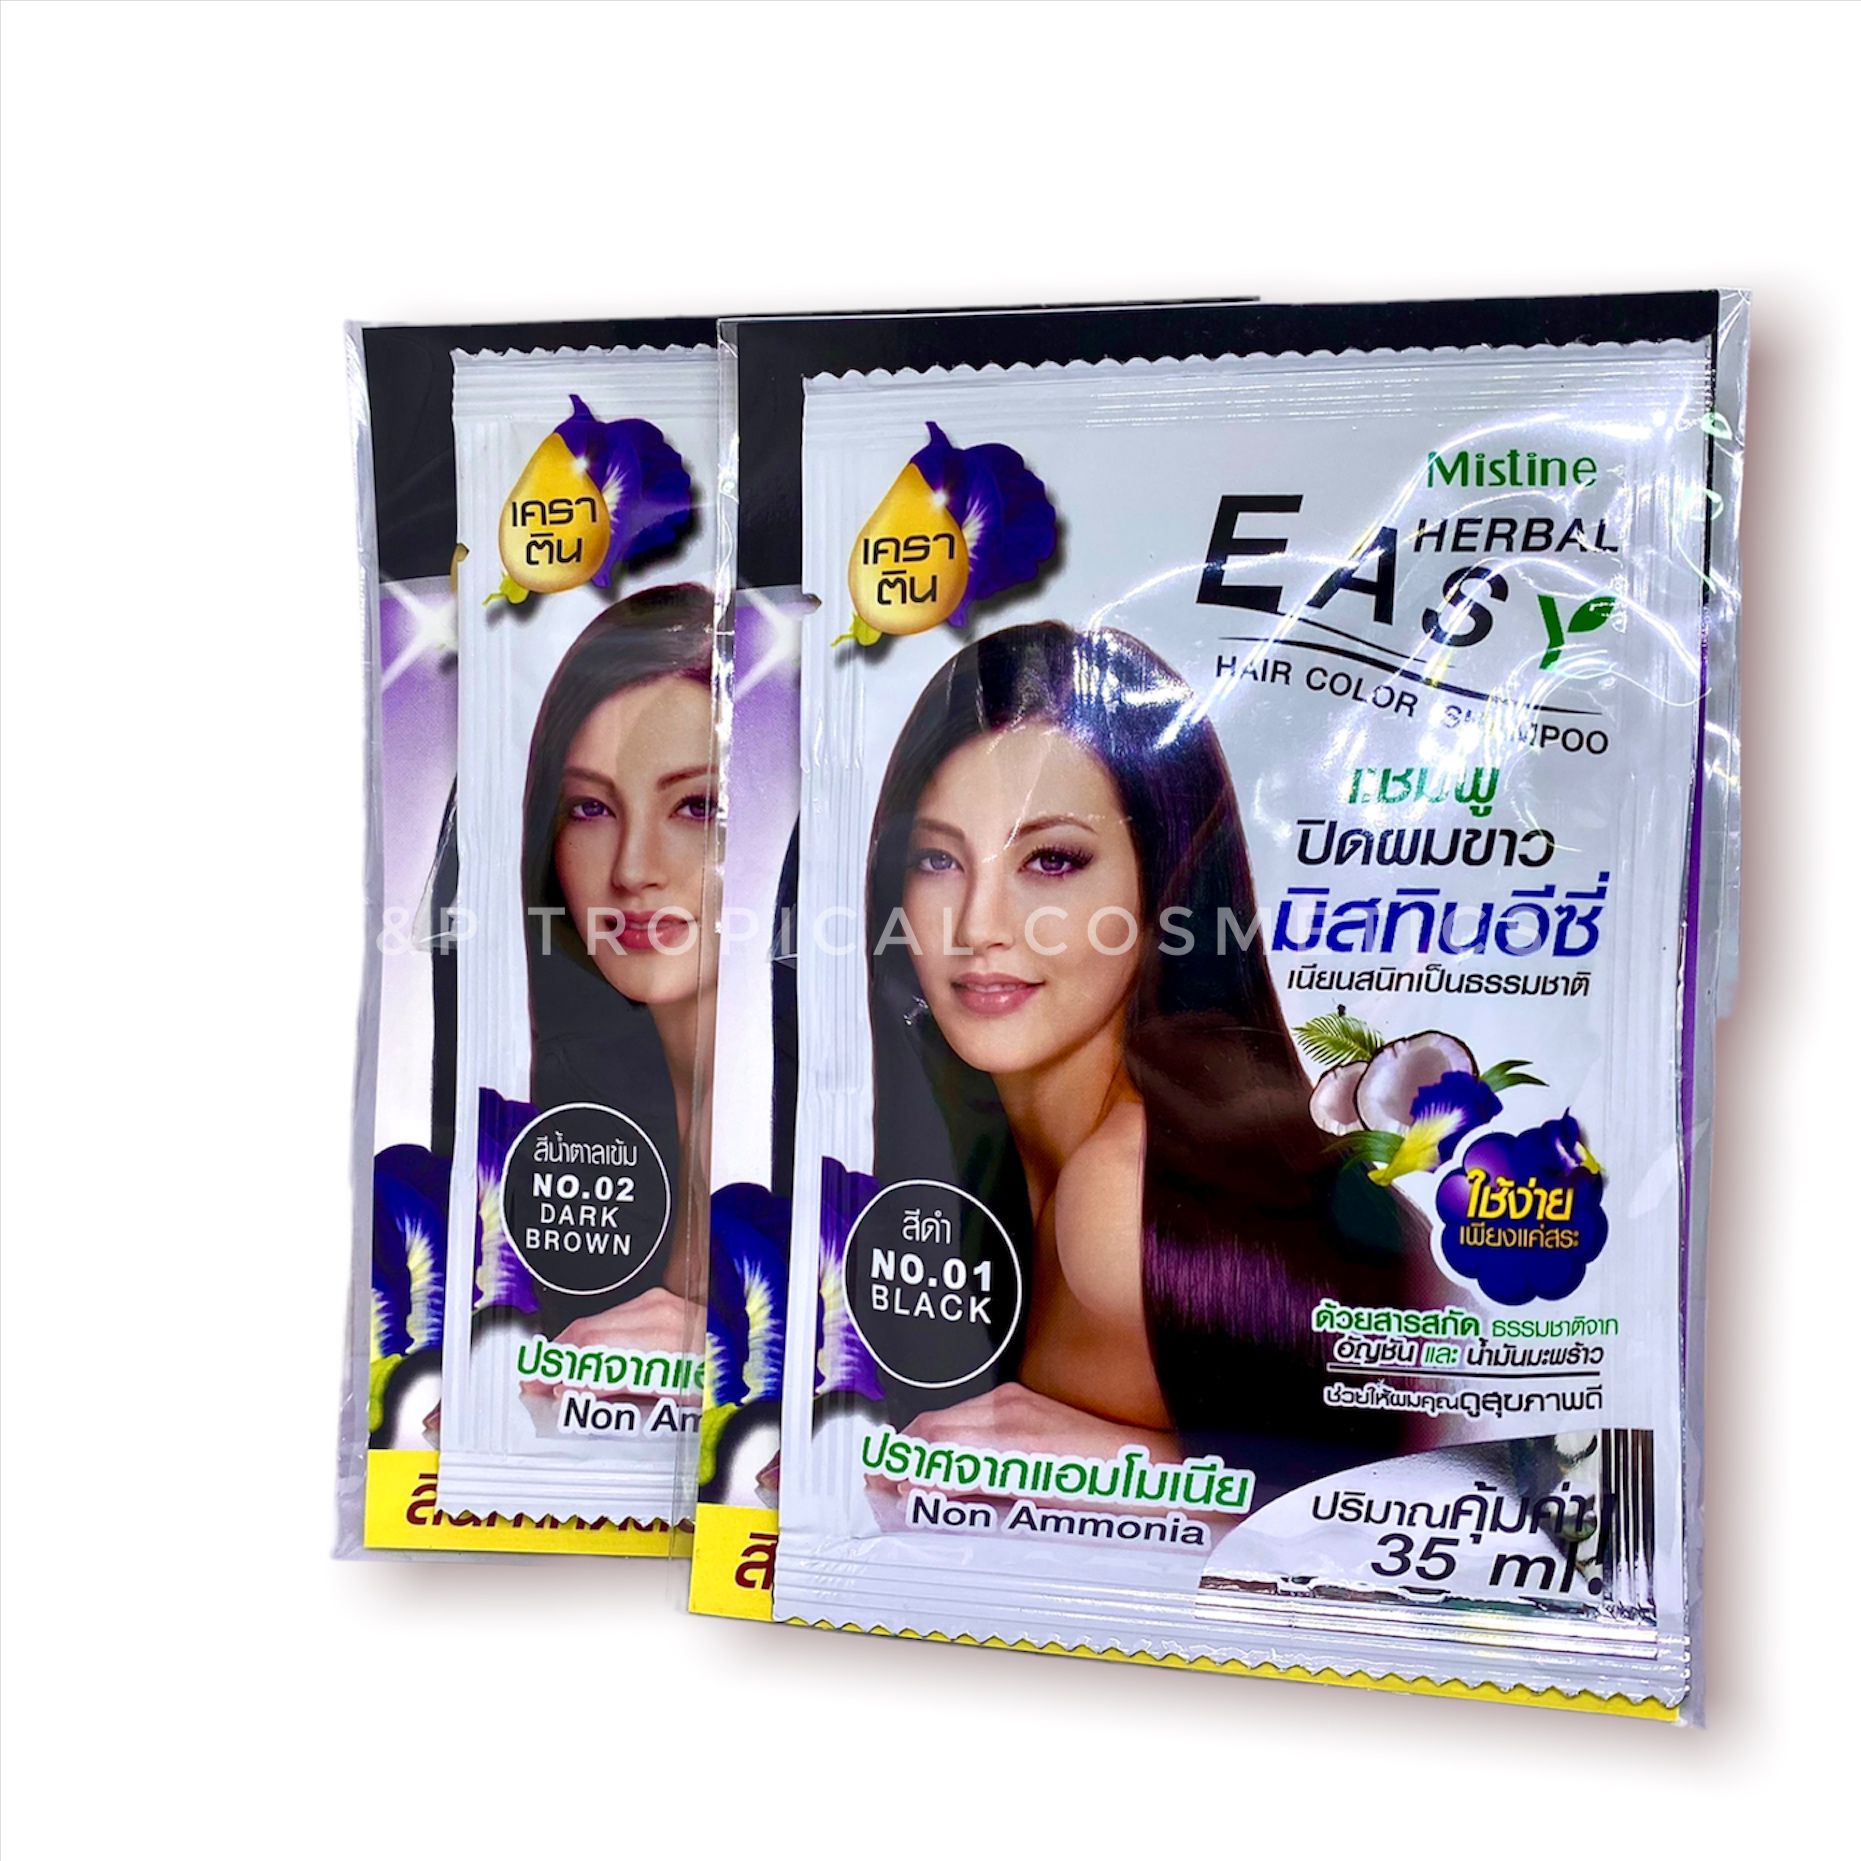 Mistine Easy Herbal Hair Color Shampoo 35 ml., Шампунь для окрашивания волос "Easy" 35 мл.